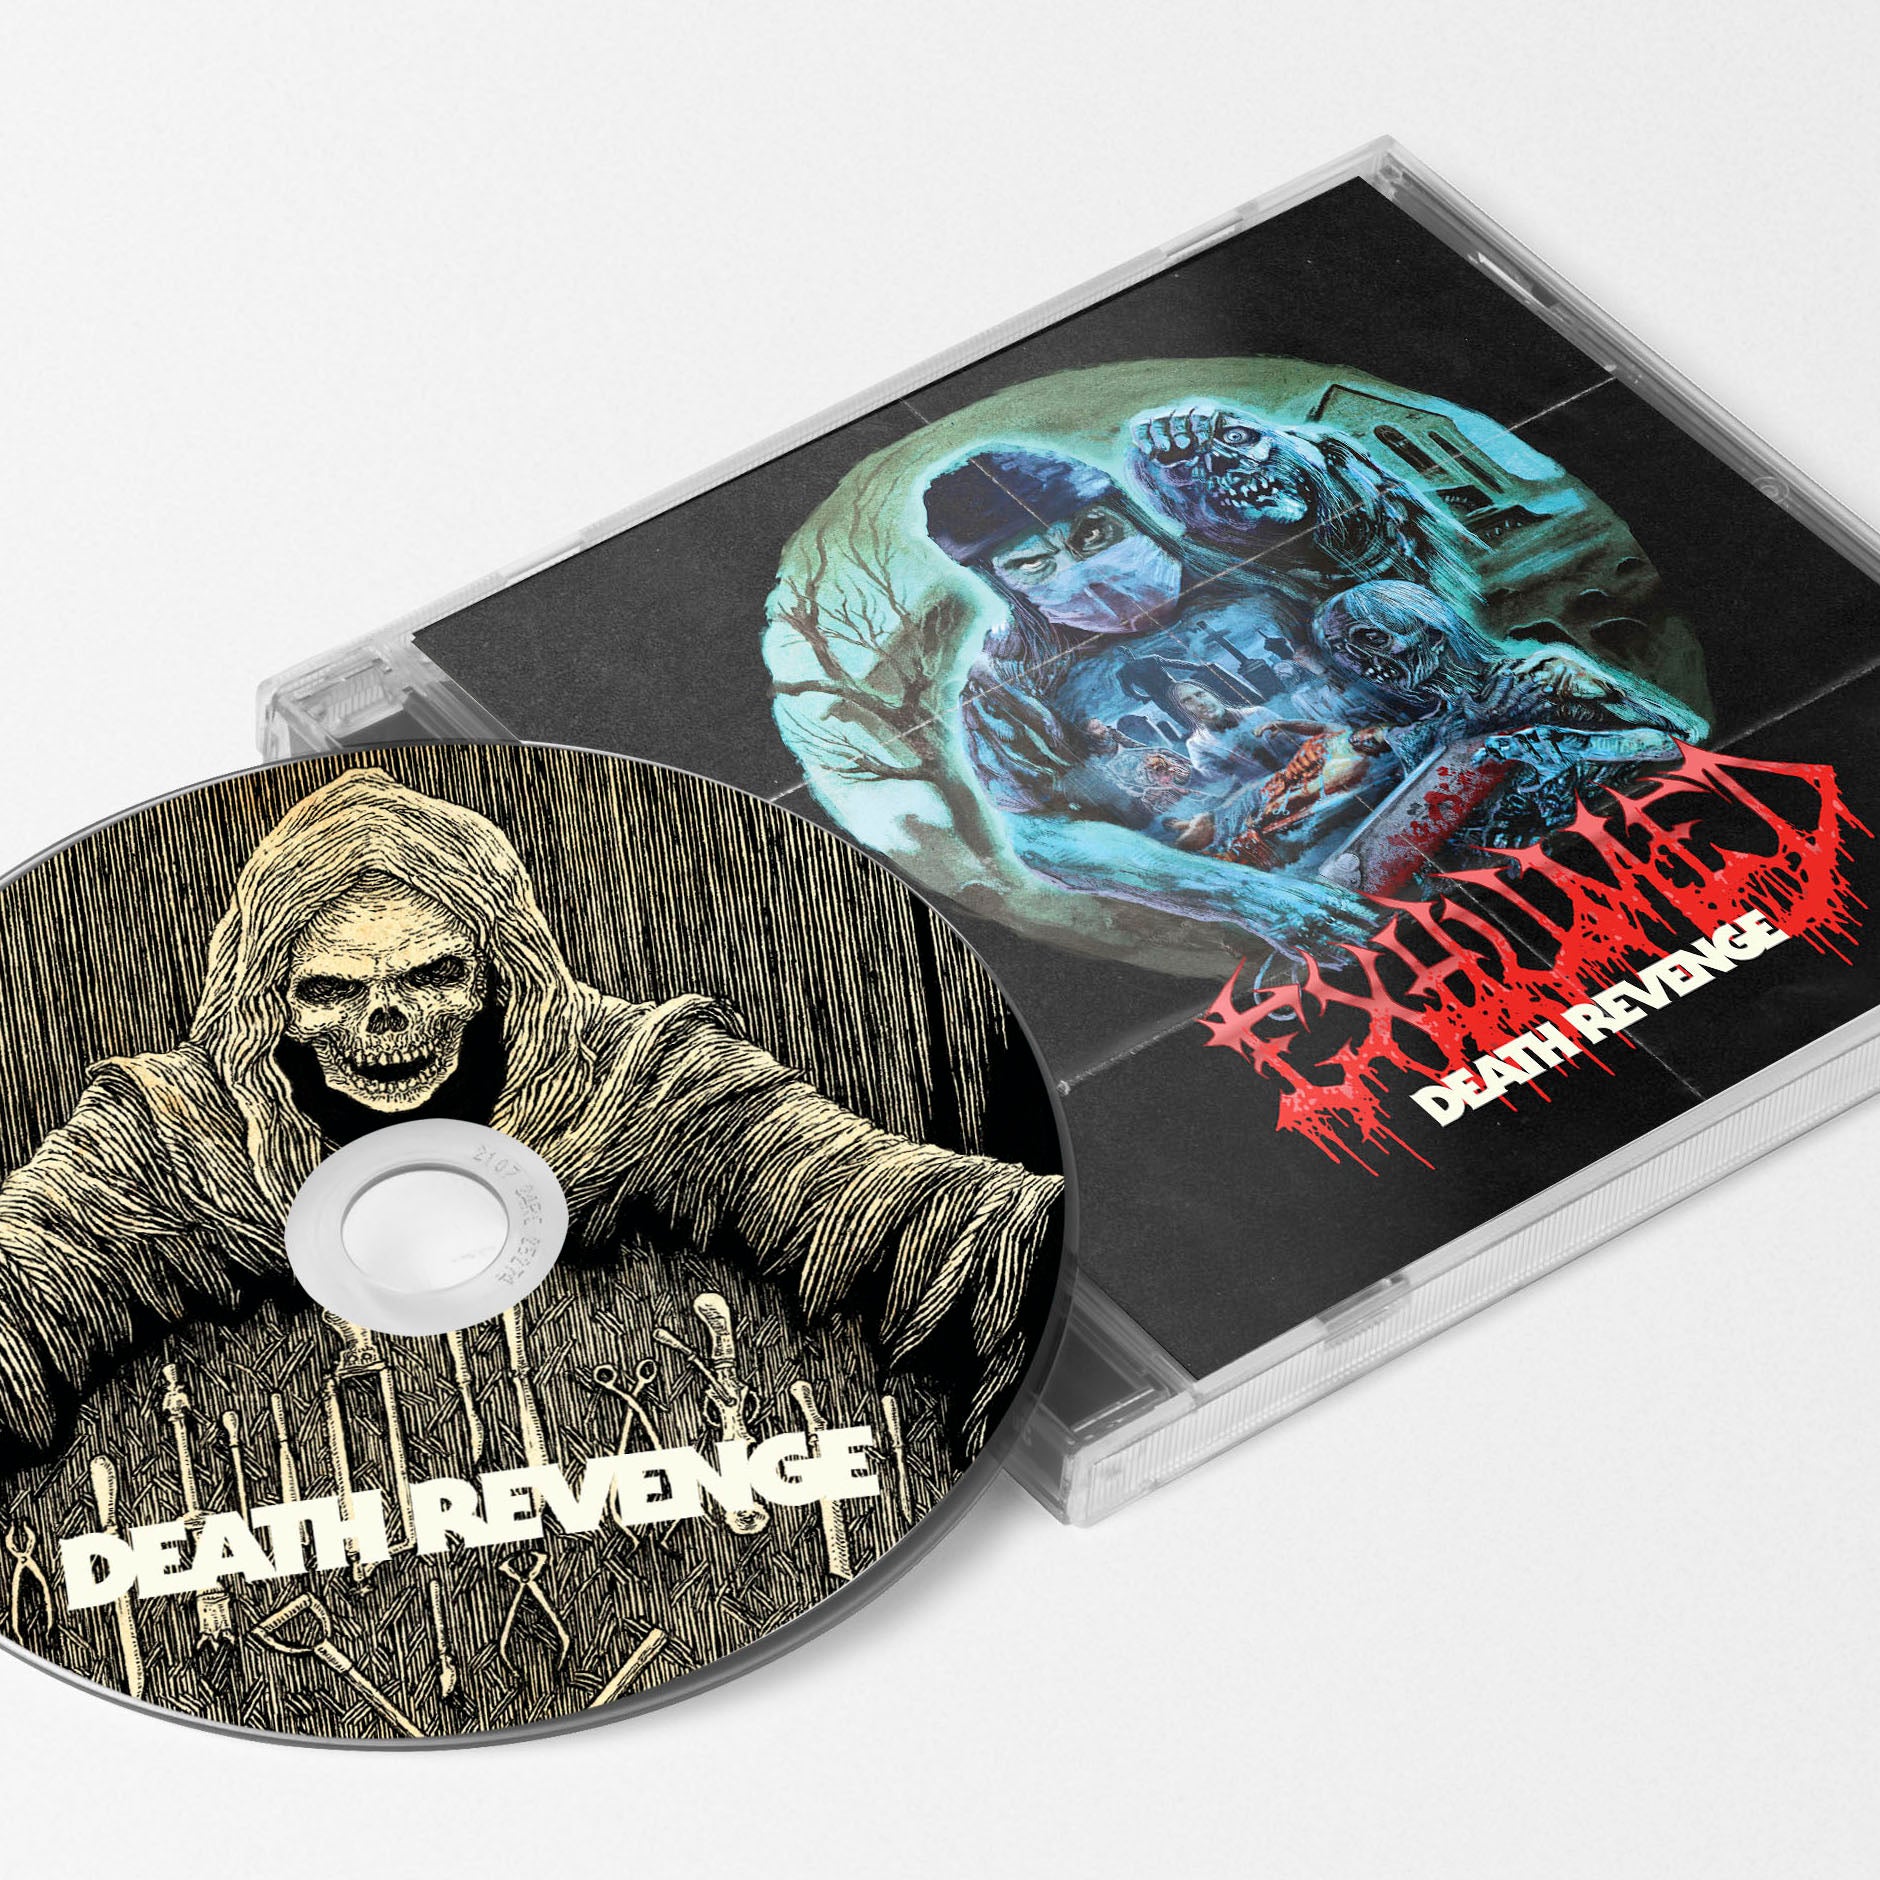 Exhumed "Death Revenge" CD